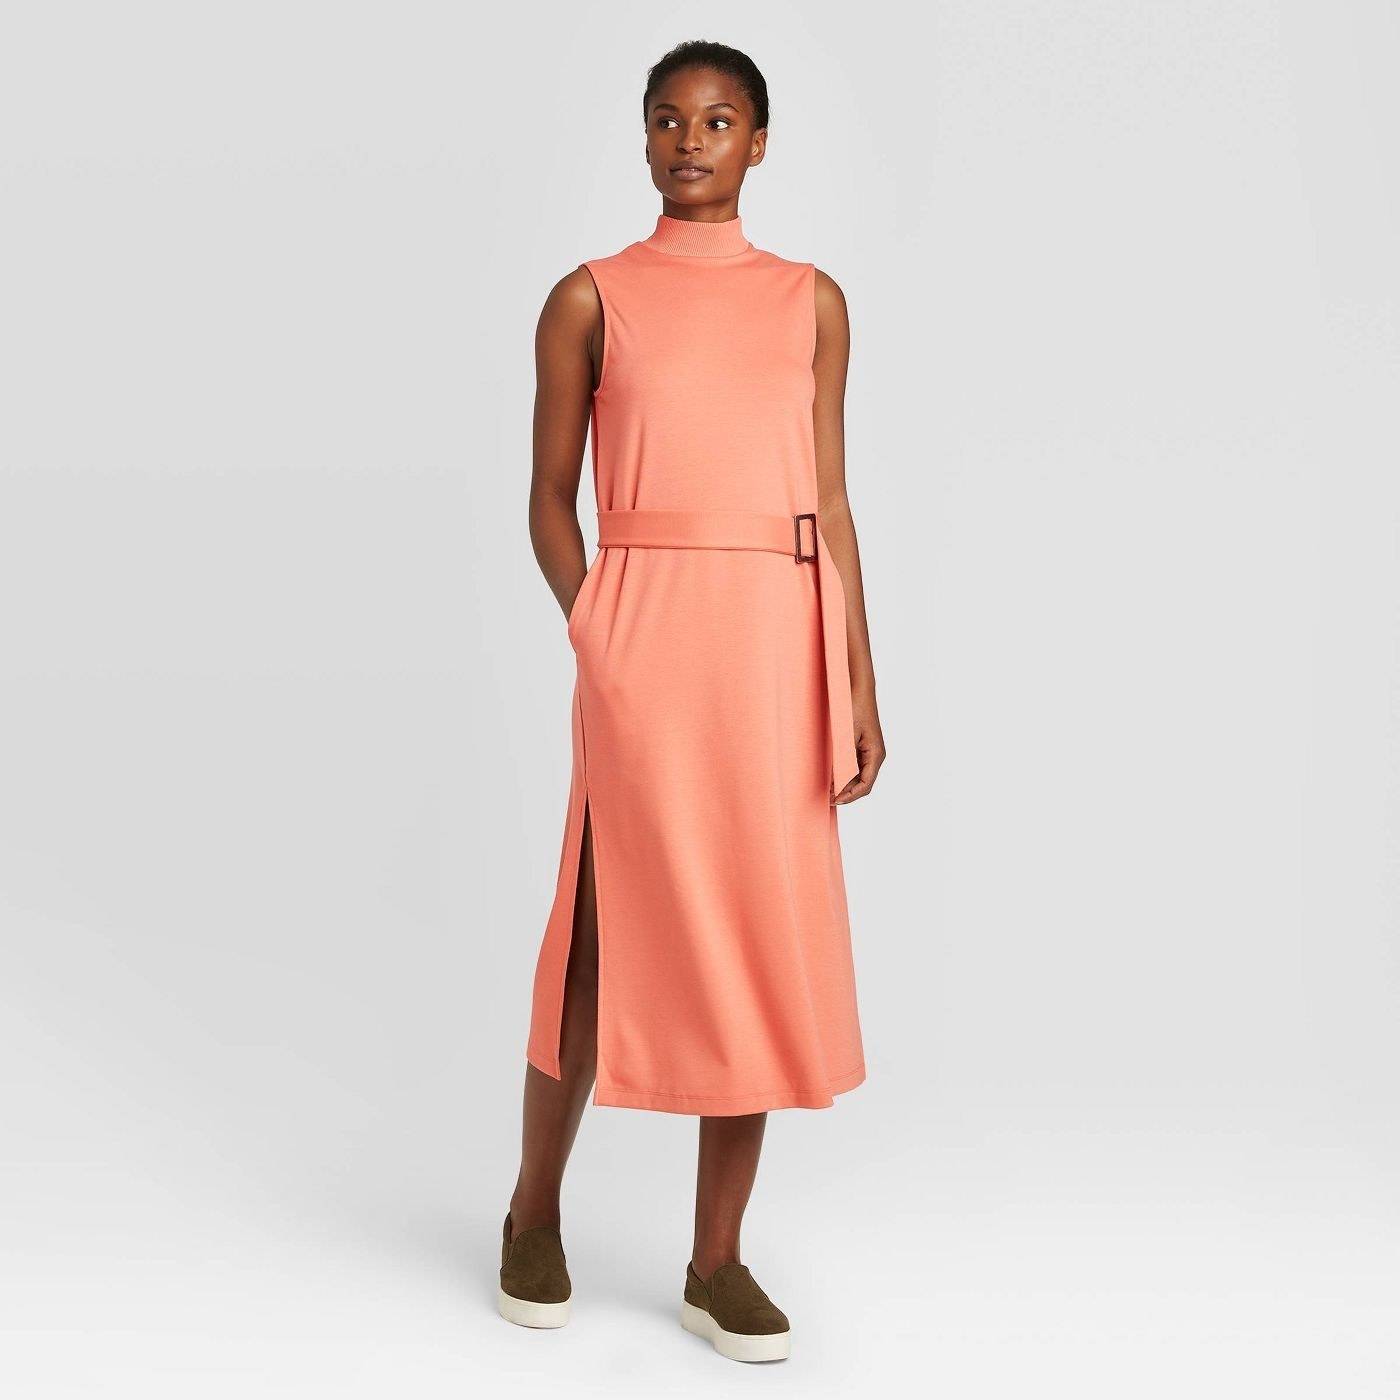 Model in a sleeveless turtleneck pink belted dress 